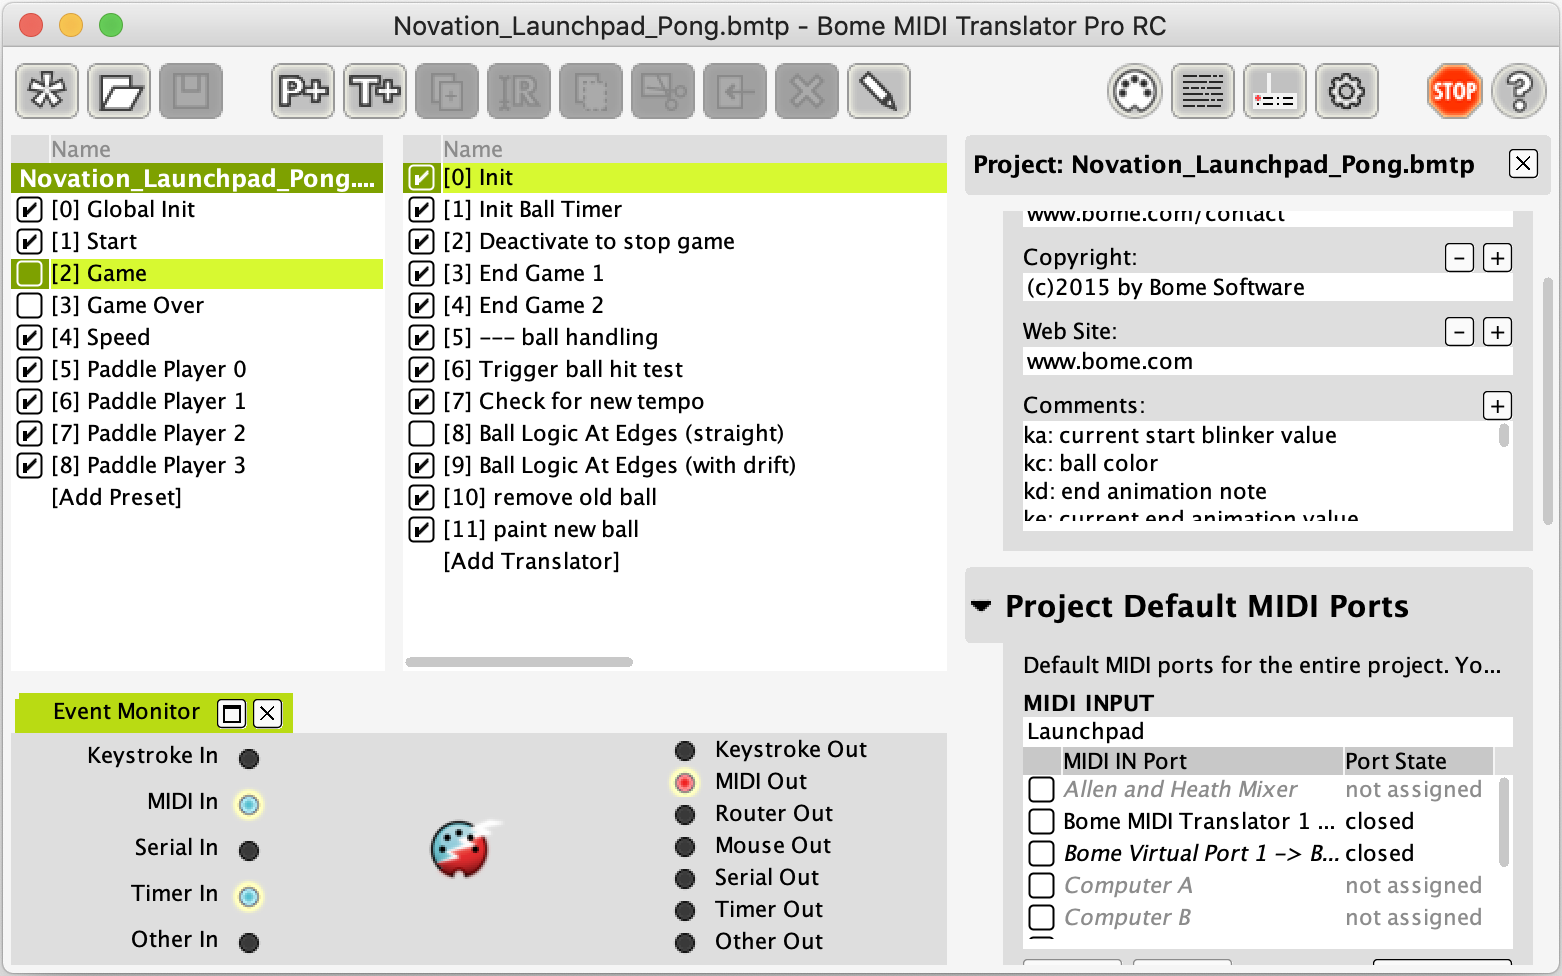 The MIDI Translator Pro main window with an advanced project loaded